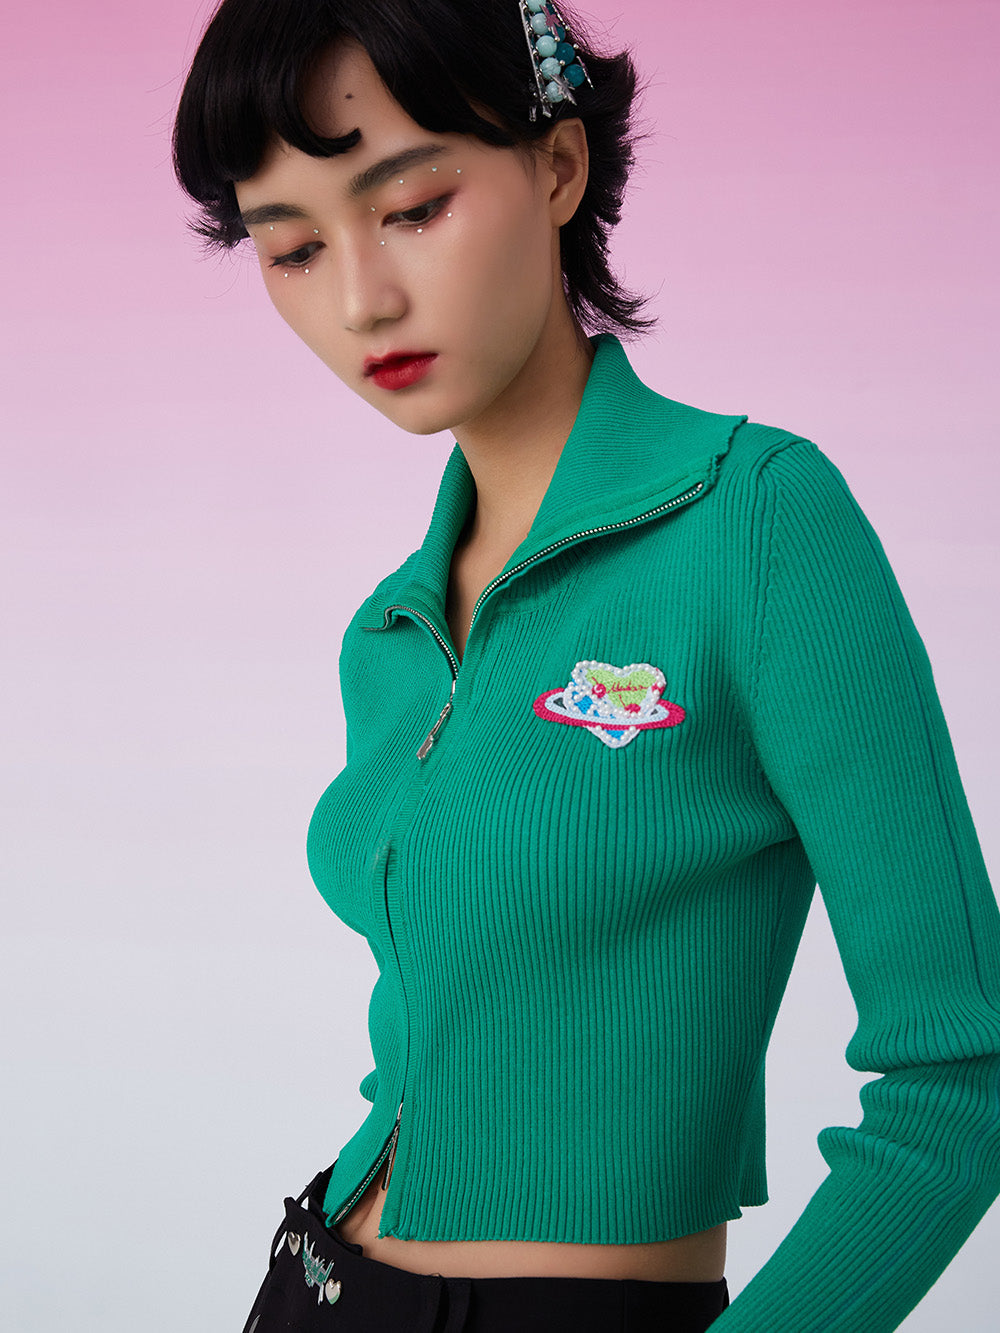 MUKZIN Knit Slim Beads Patched Green Shirt